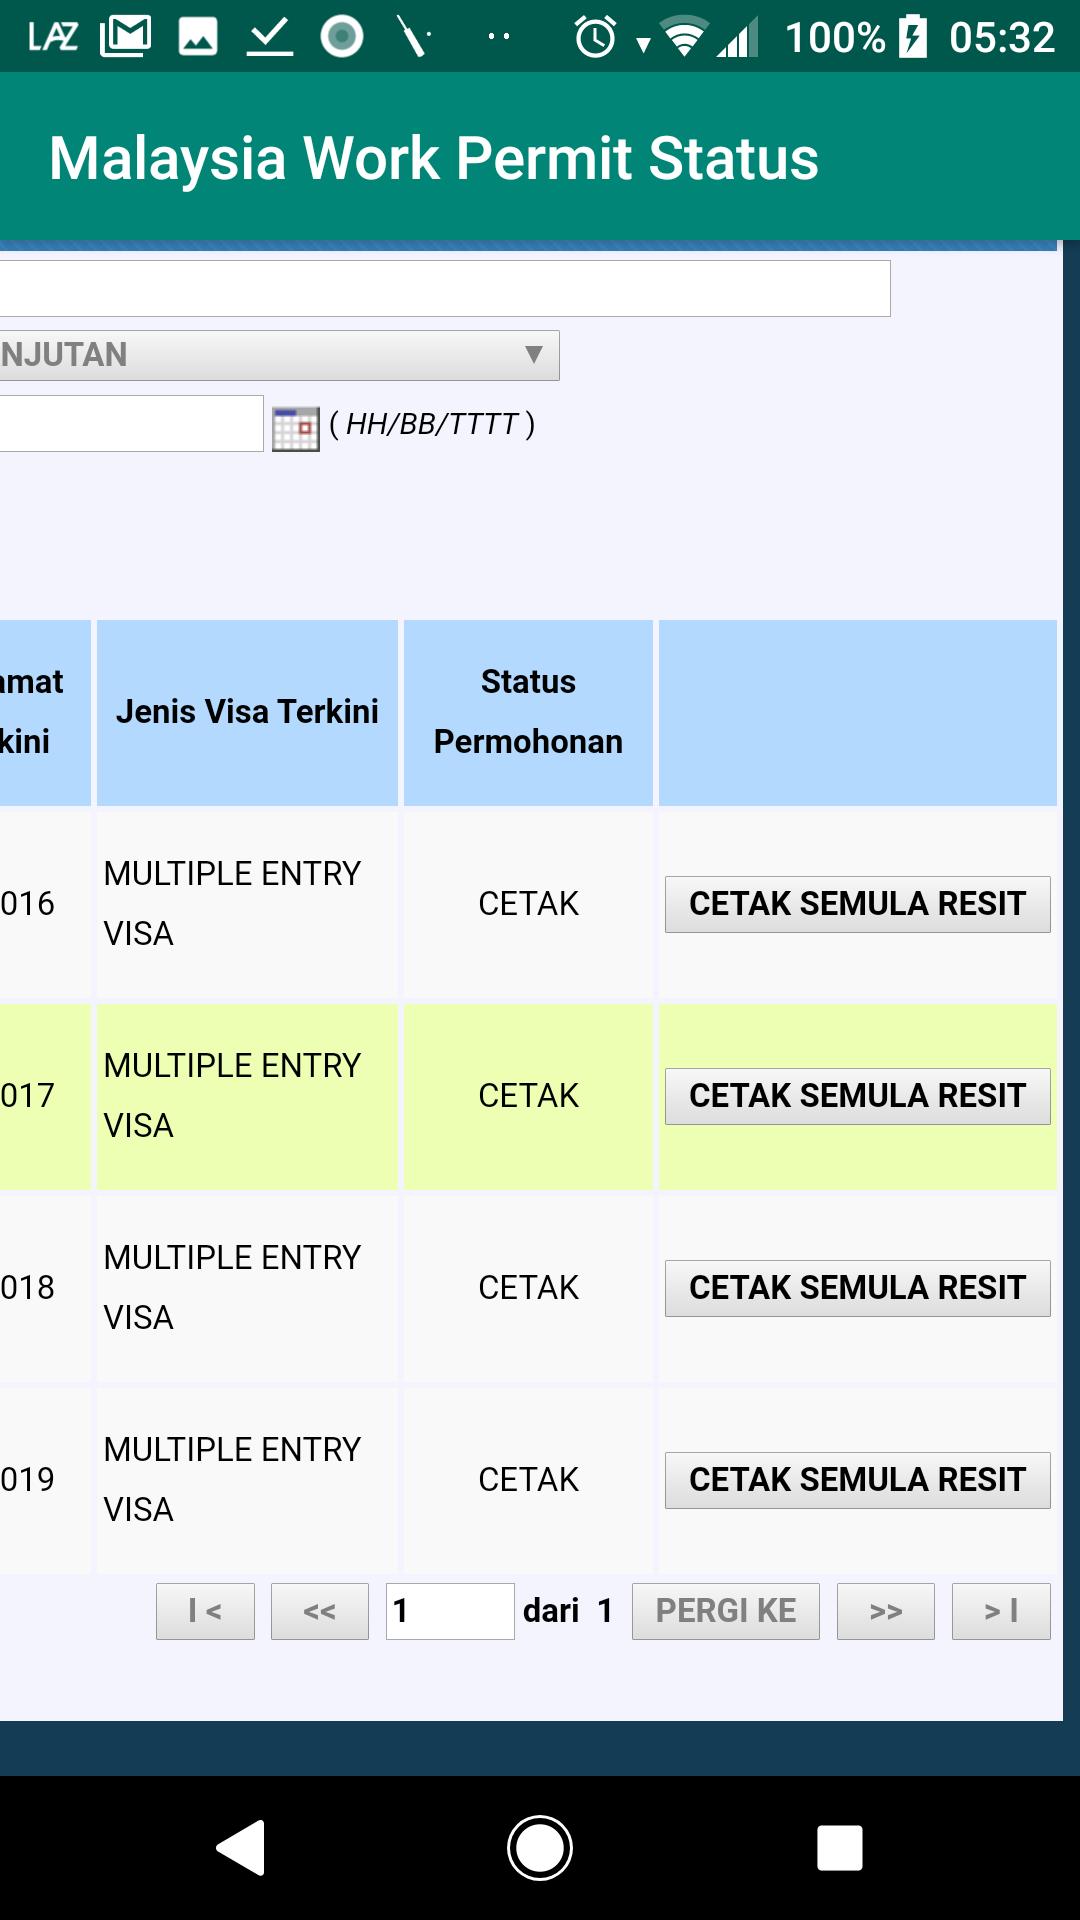 Malaysia work permit status